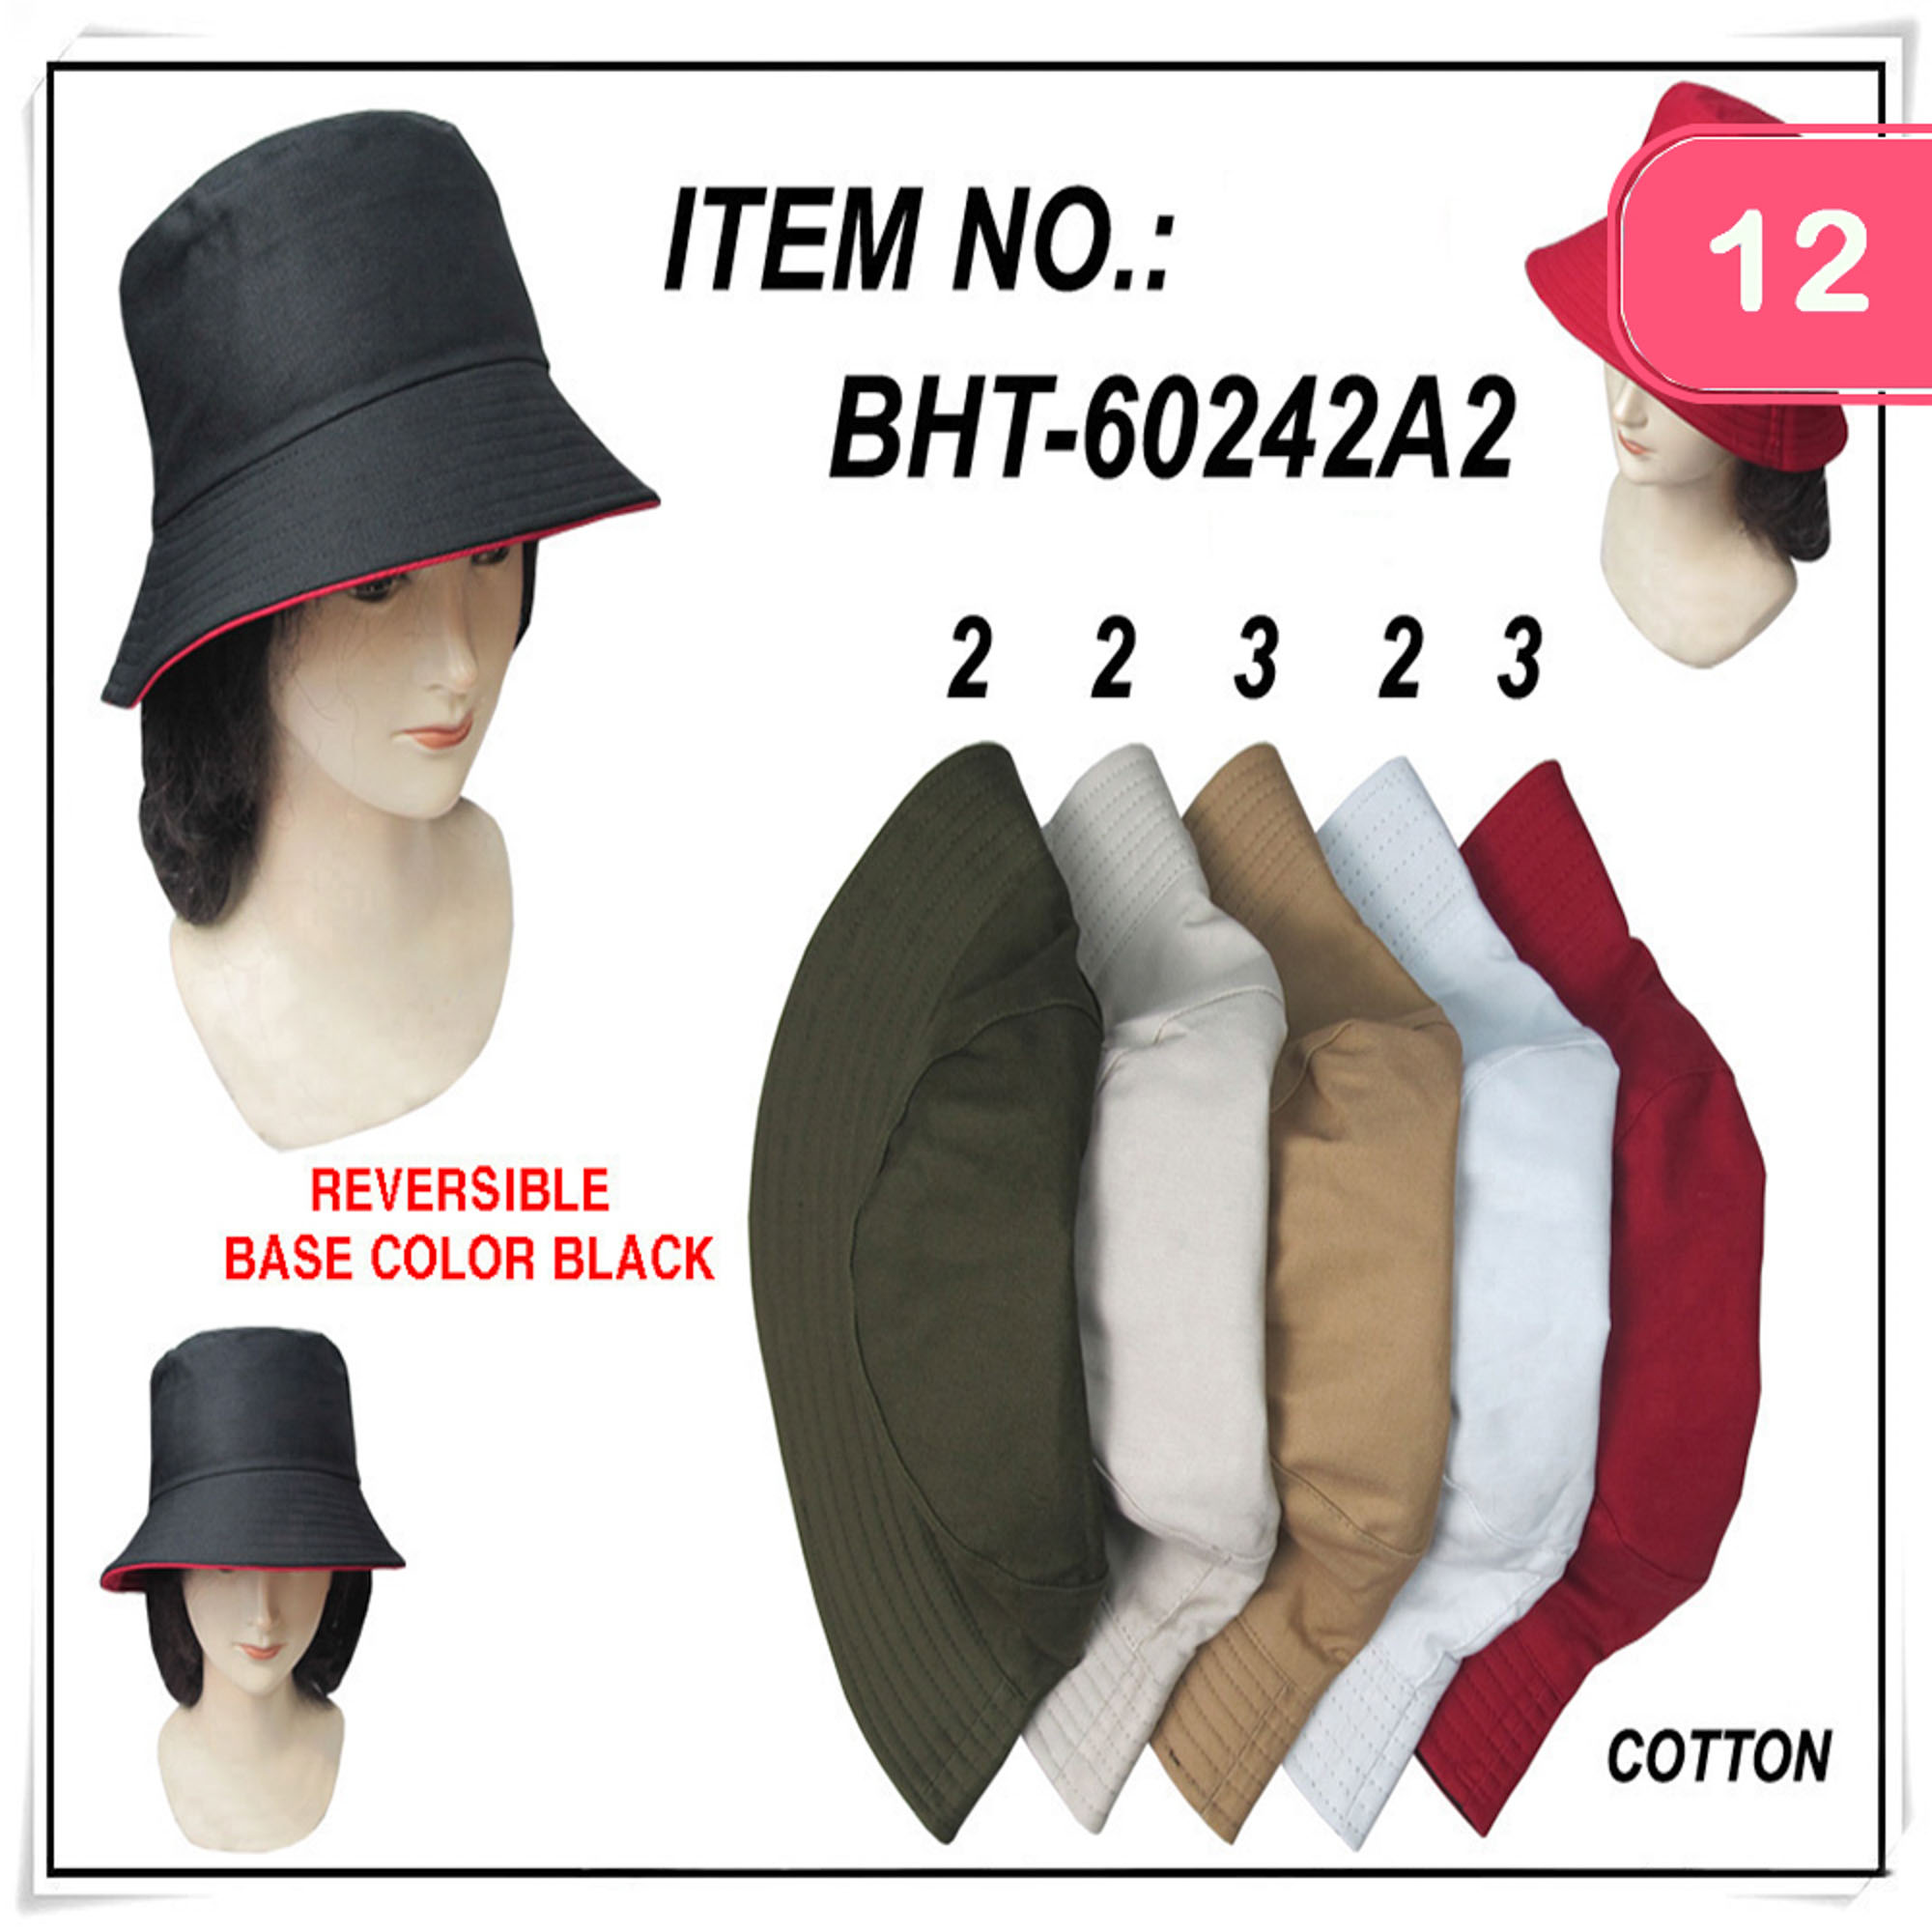 REVERSIDE BASIC COLOR BUCKET HAT (12 UNITS)